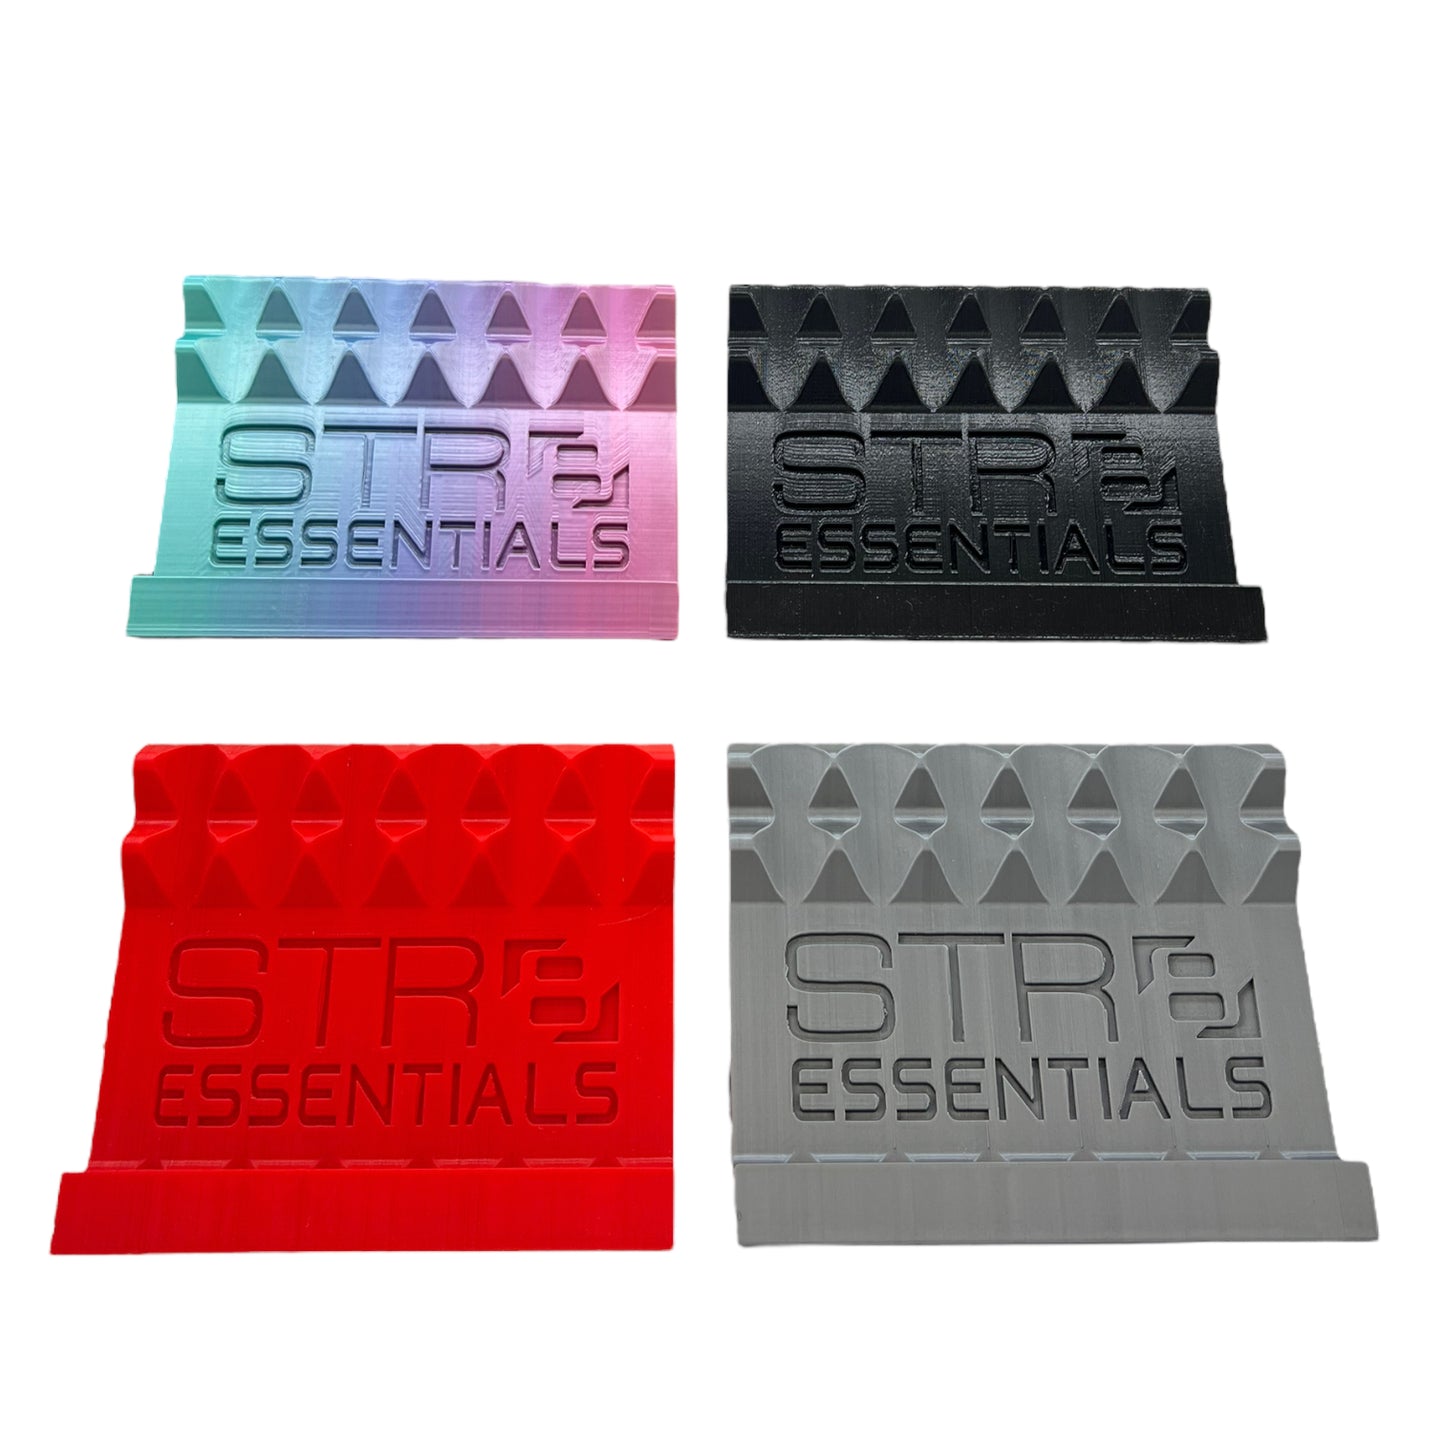 STR8 Essentials - 6 Slot Stand Up Dabber Display